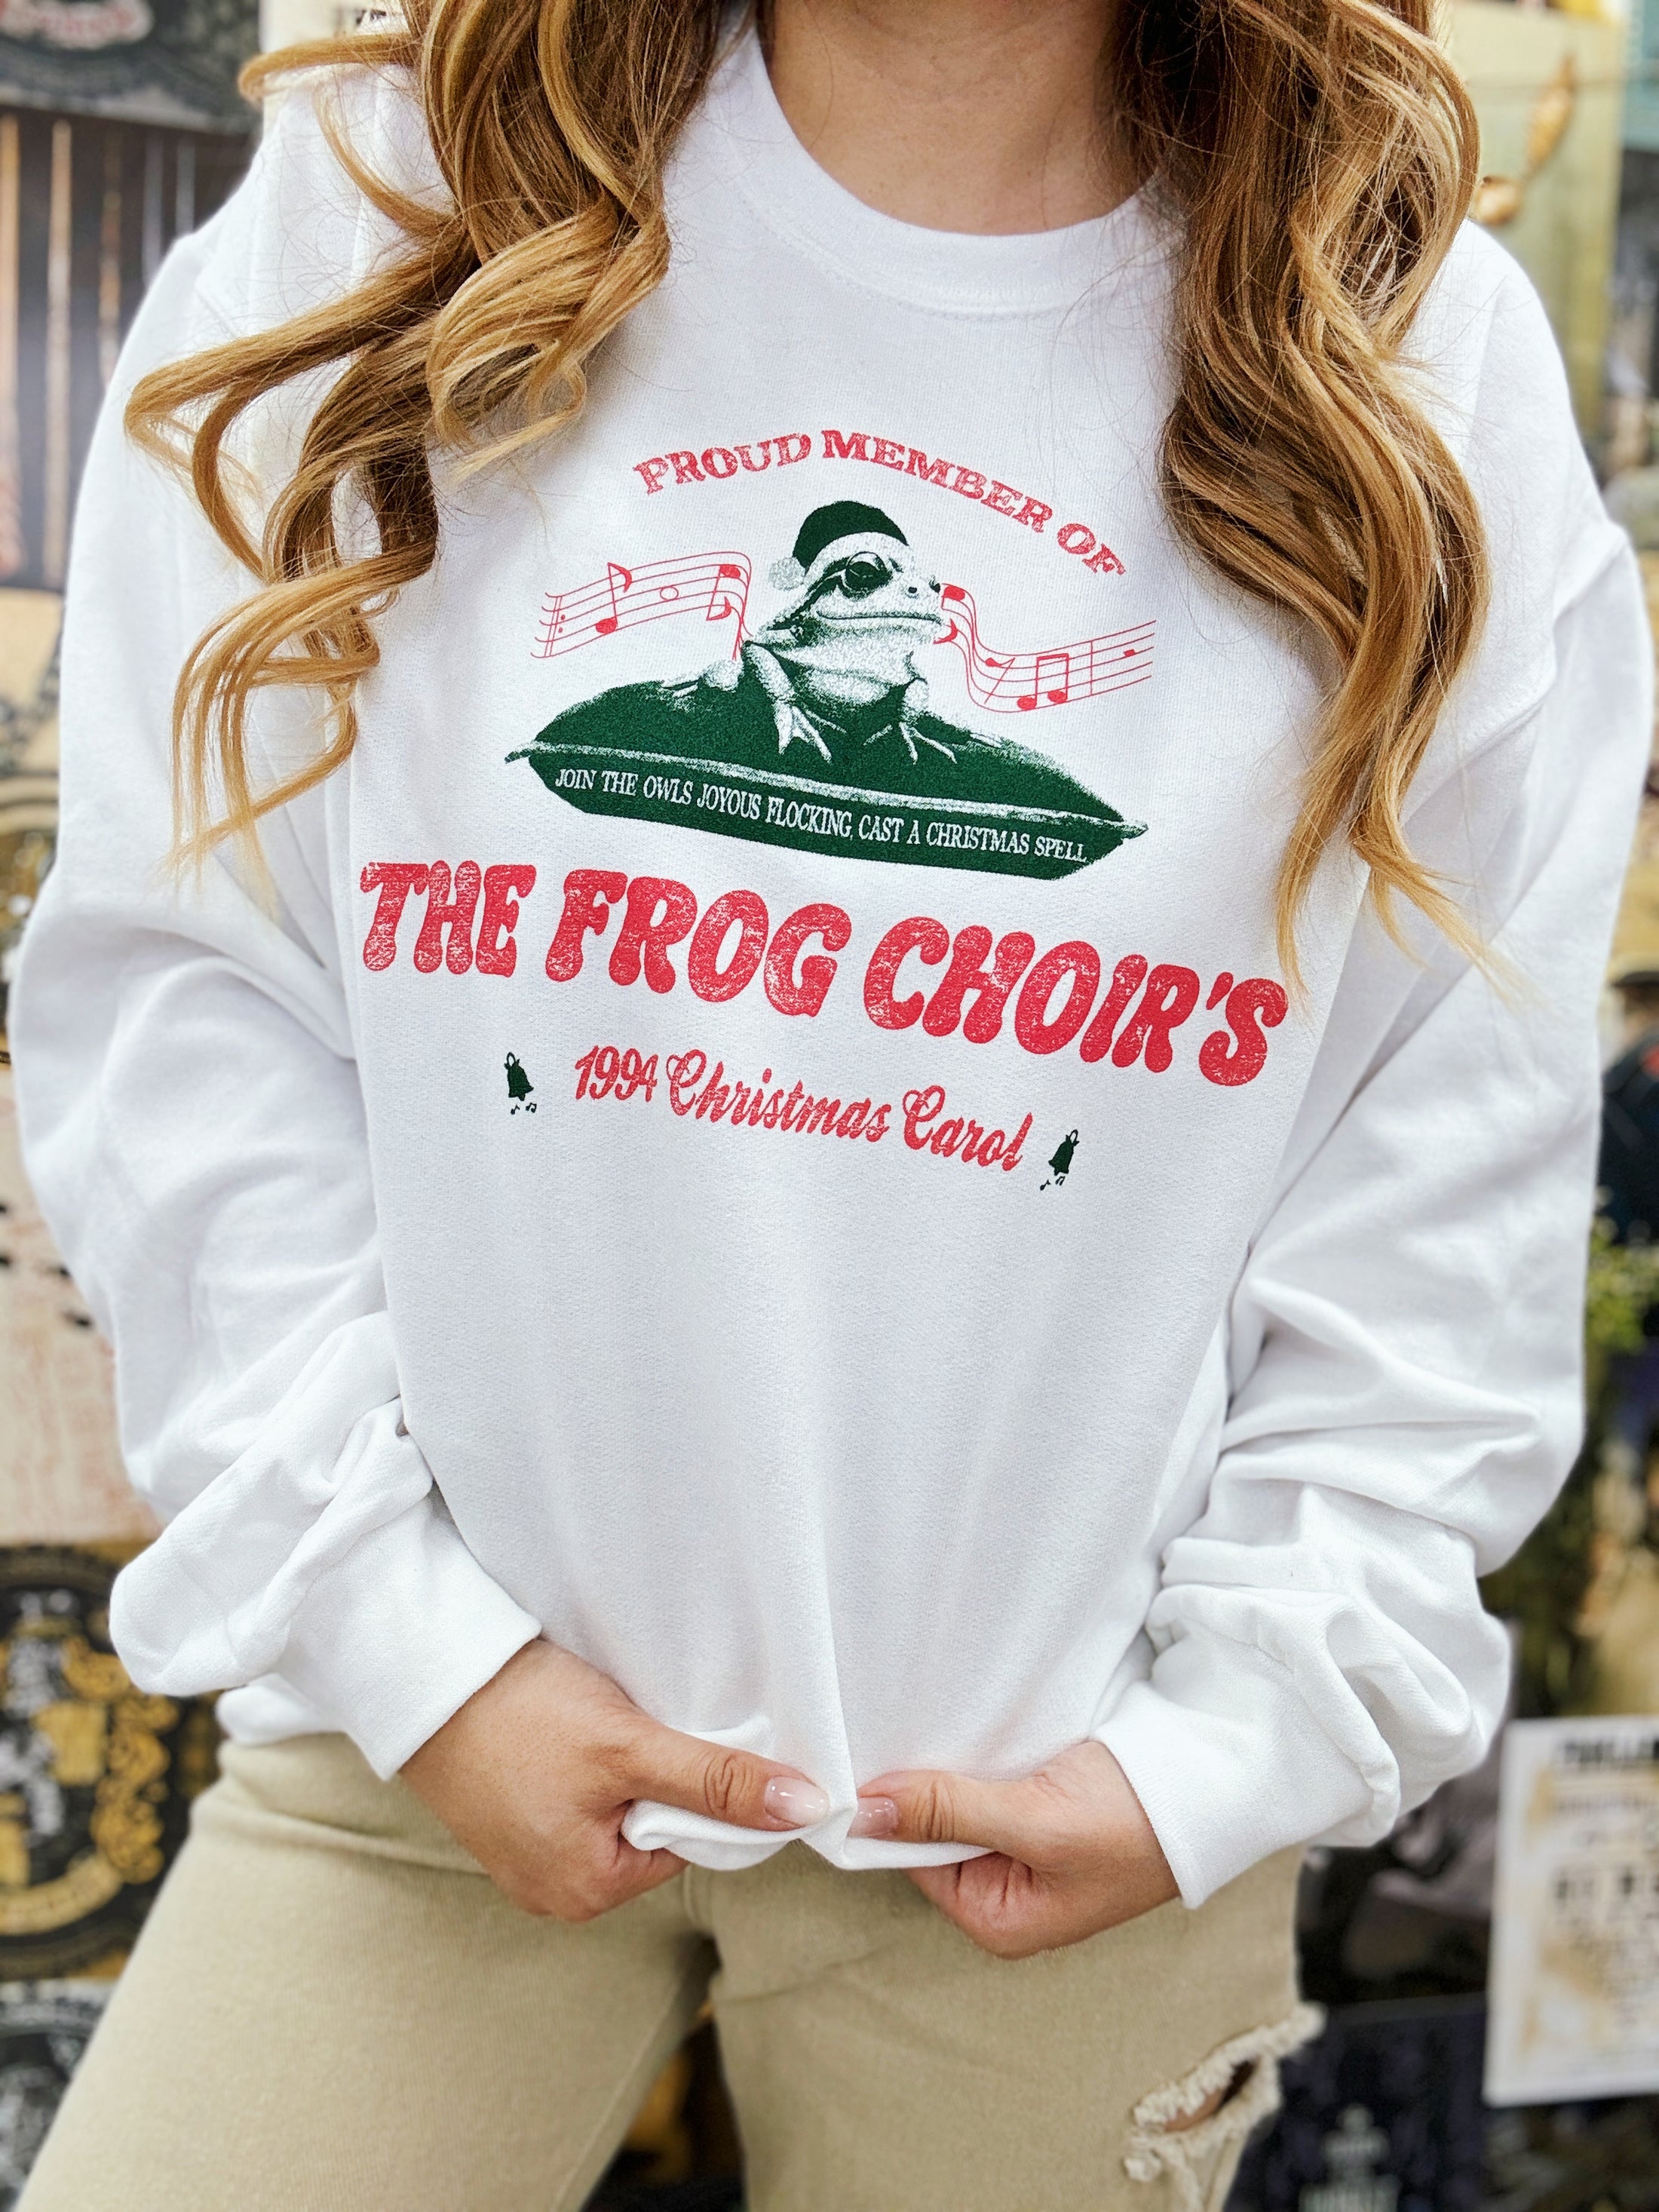 The Frog Choir Christmas Sweatshirt